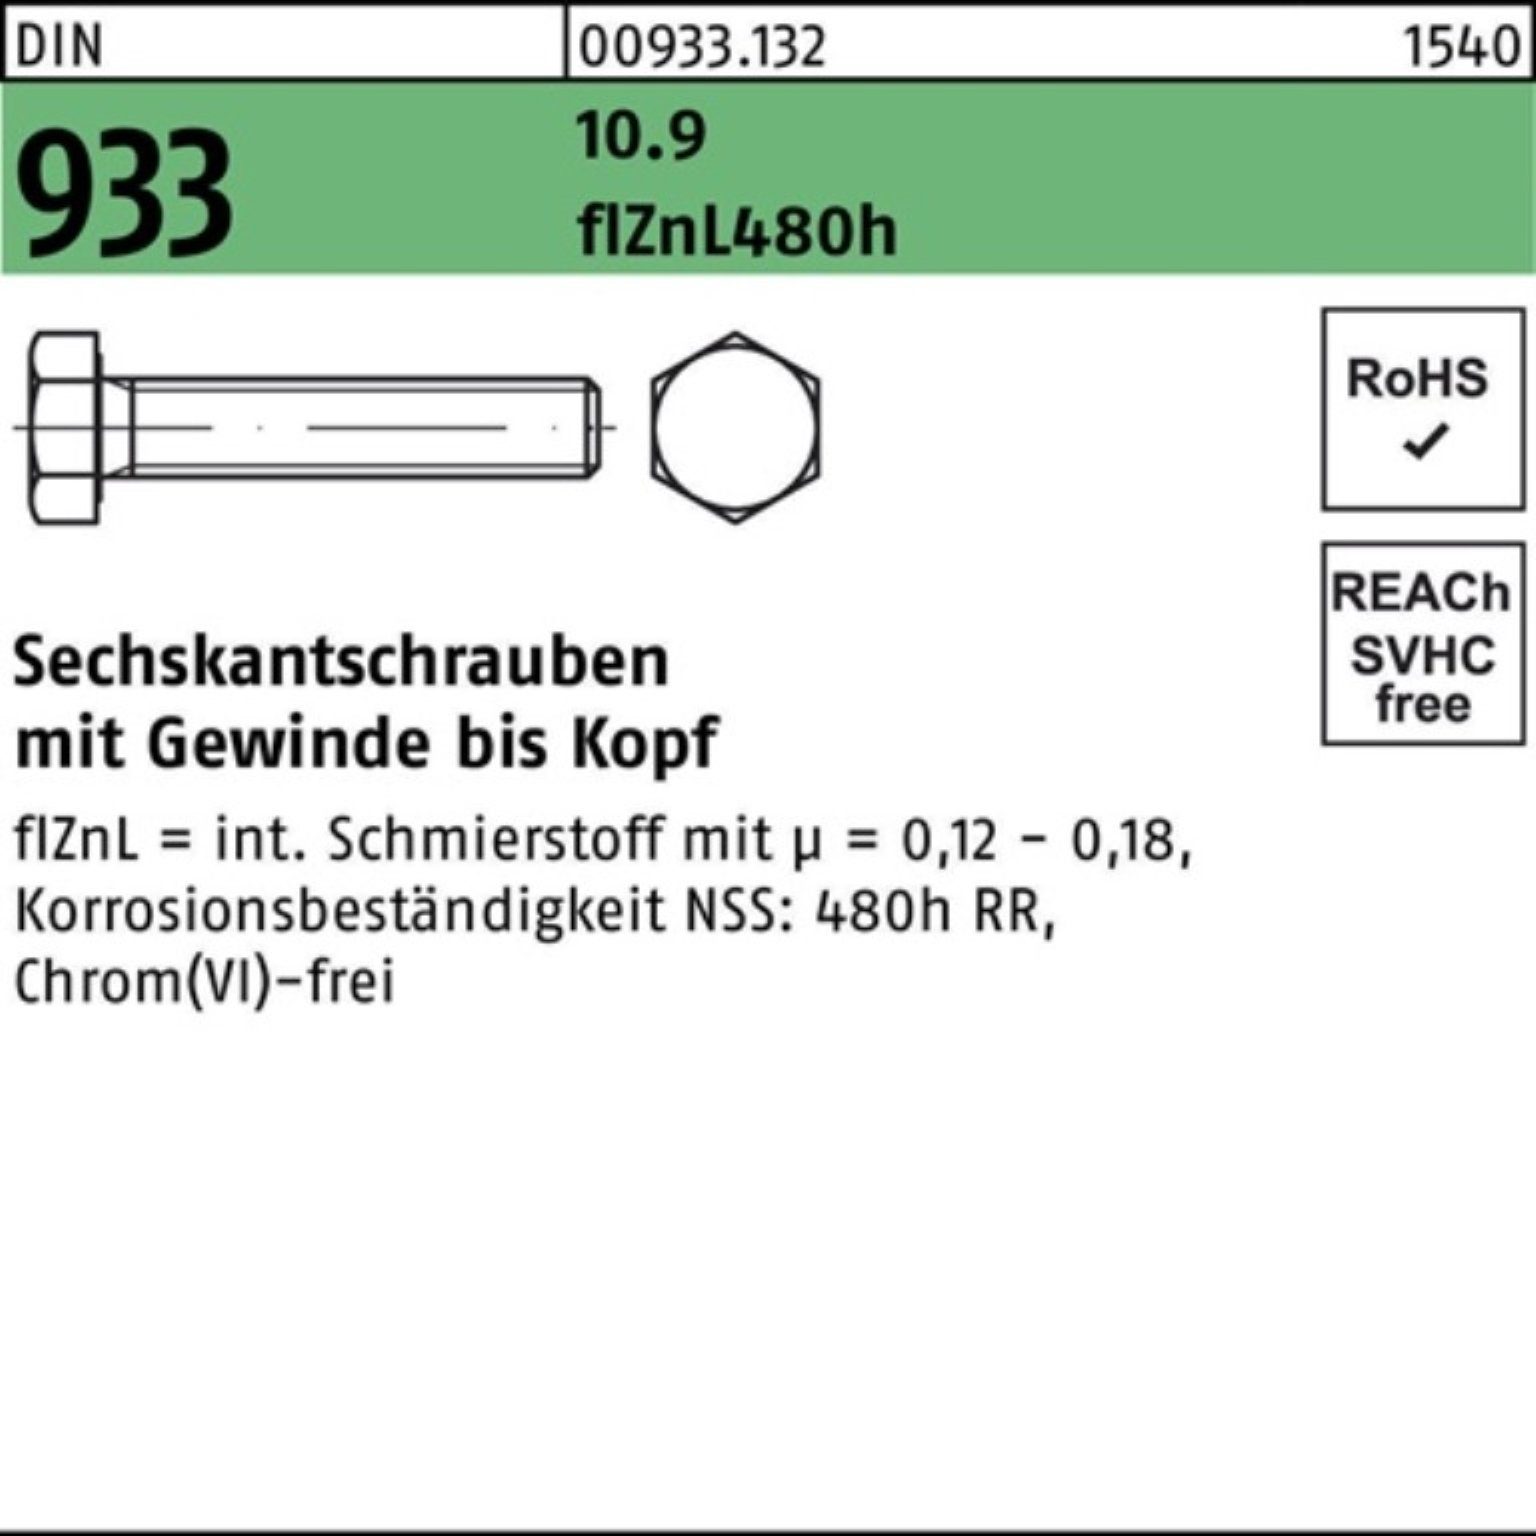 Reyher Sechskantschraube 100er Pack Sechskantschraube DIN 933 VG M16x 45 10.9 flZnL/nc/x/x/480h